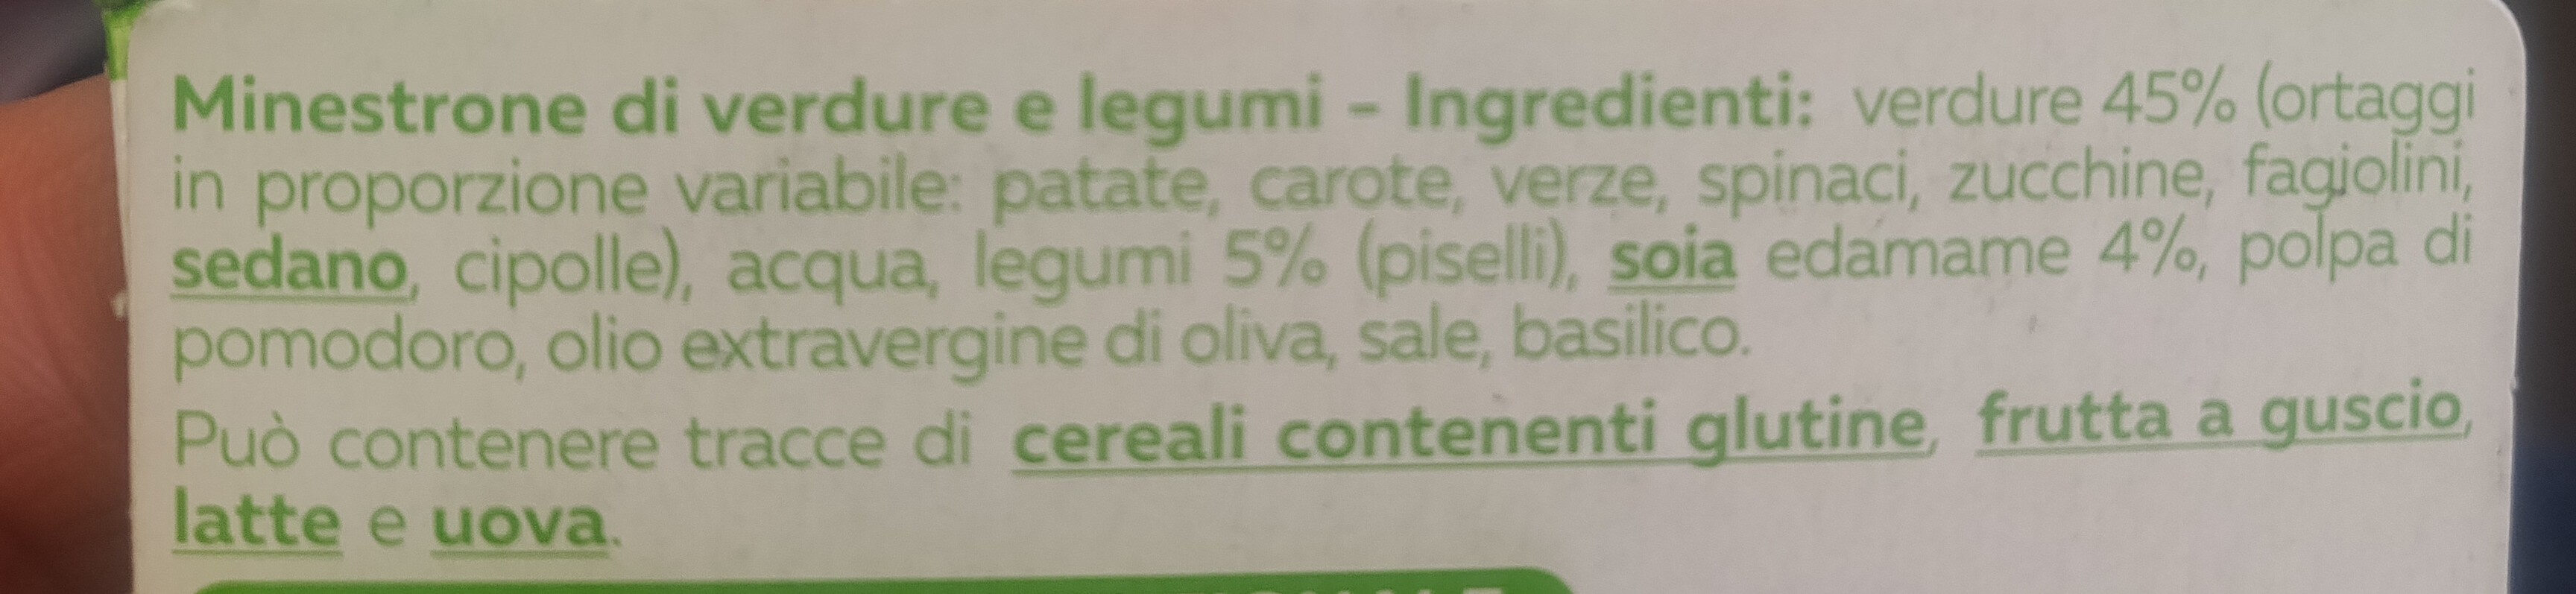 Minestrone di verdure con soia edamame - Ingredienti - it